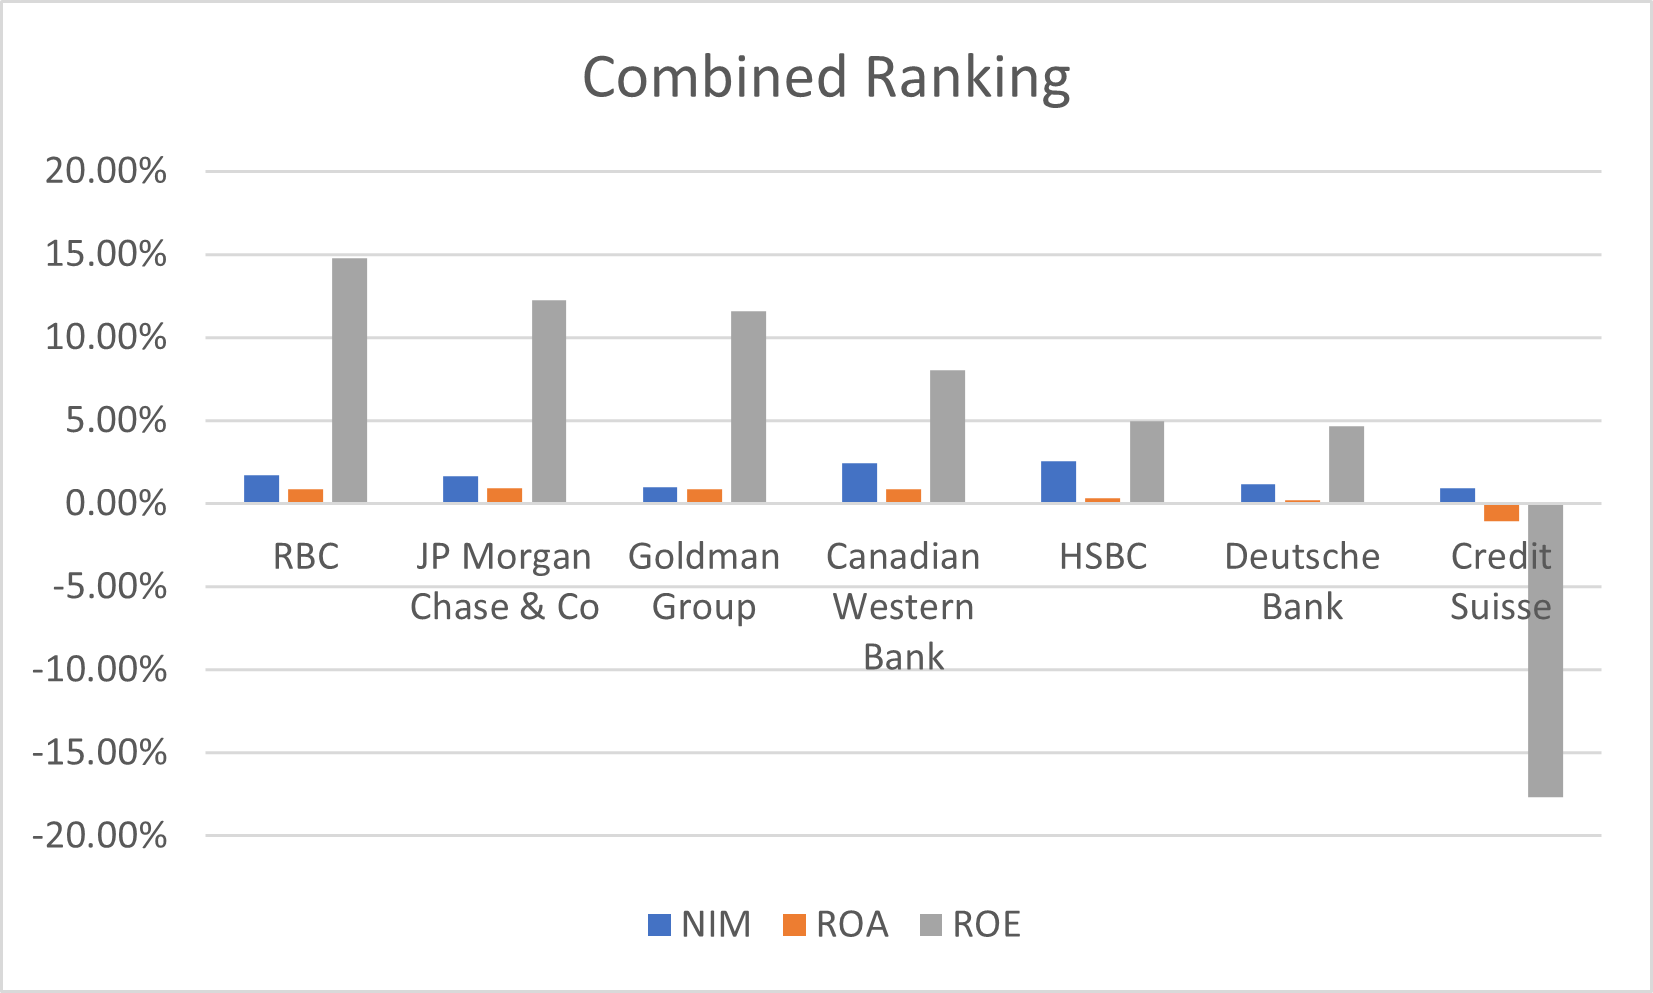 Combined ranking bar chart